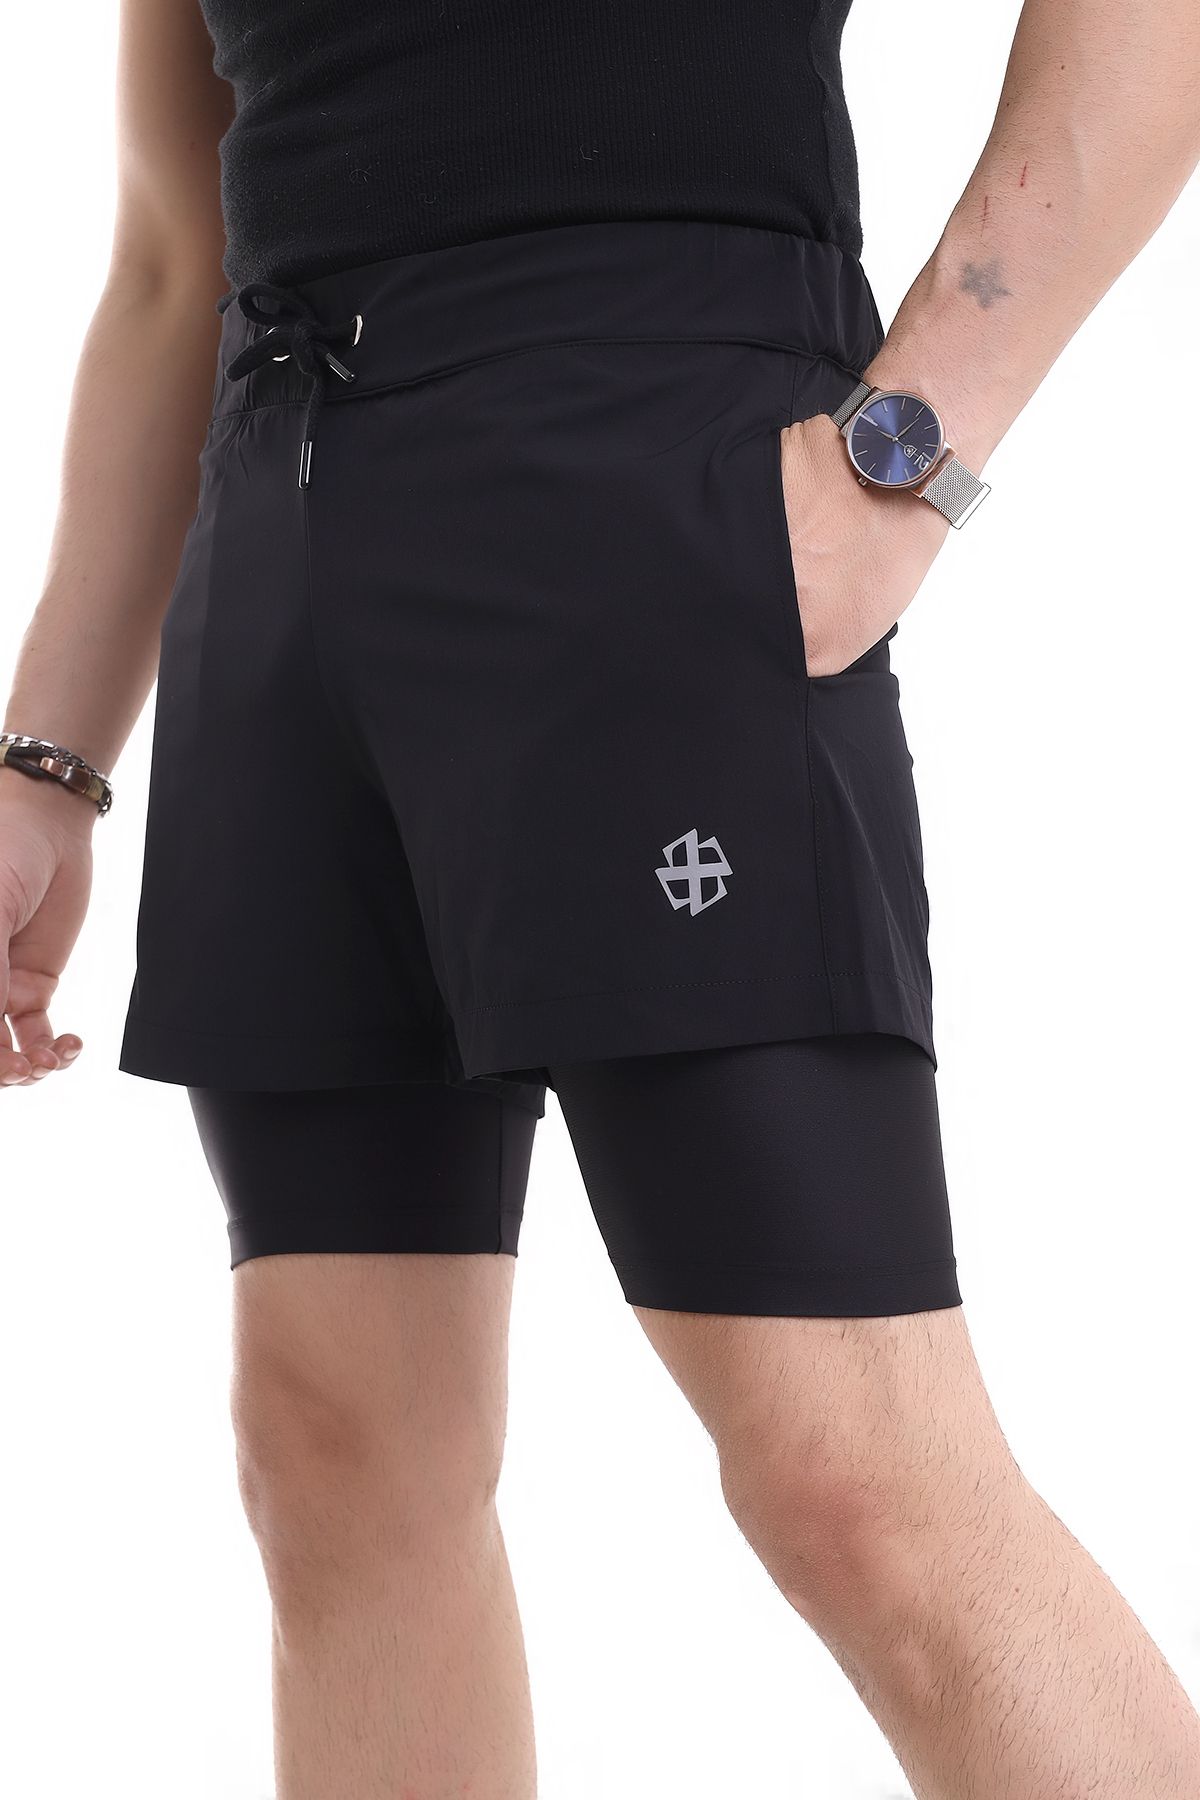 DeChival Erkek Taytlı Şort Fıtness / Men's Tights Shorts